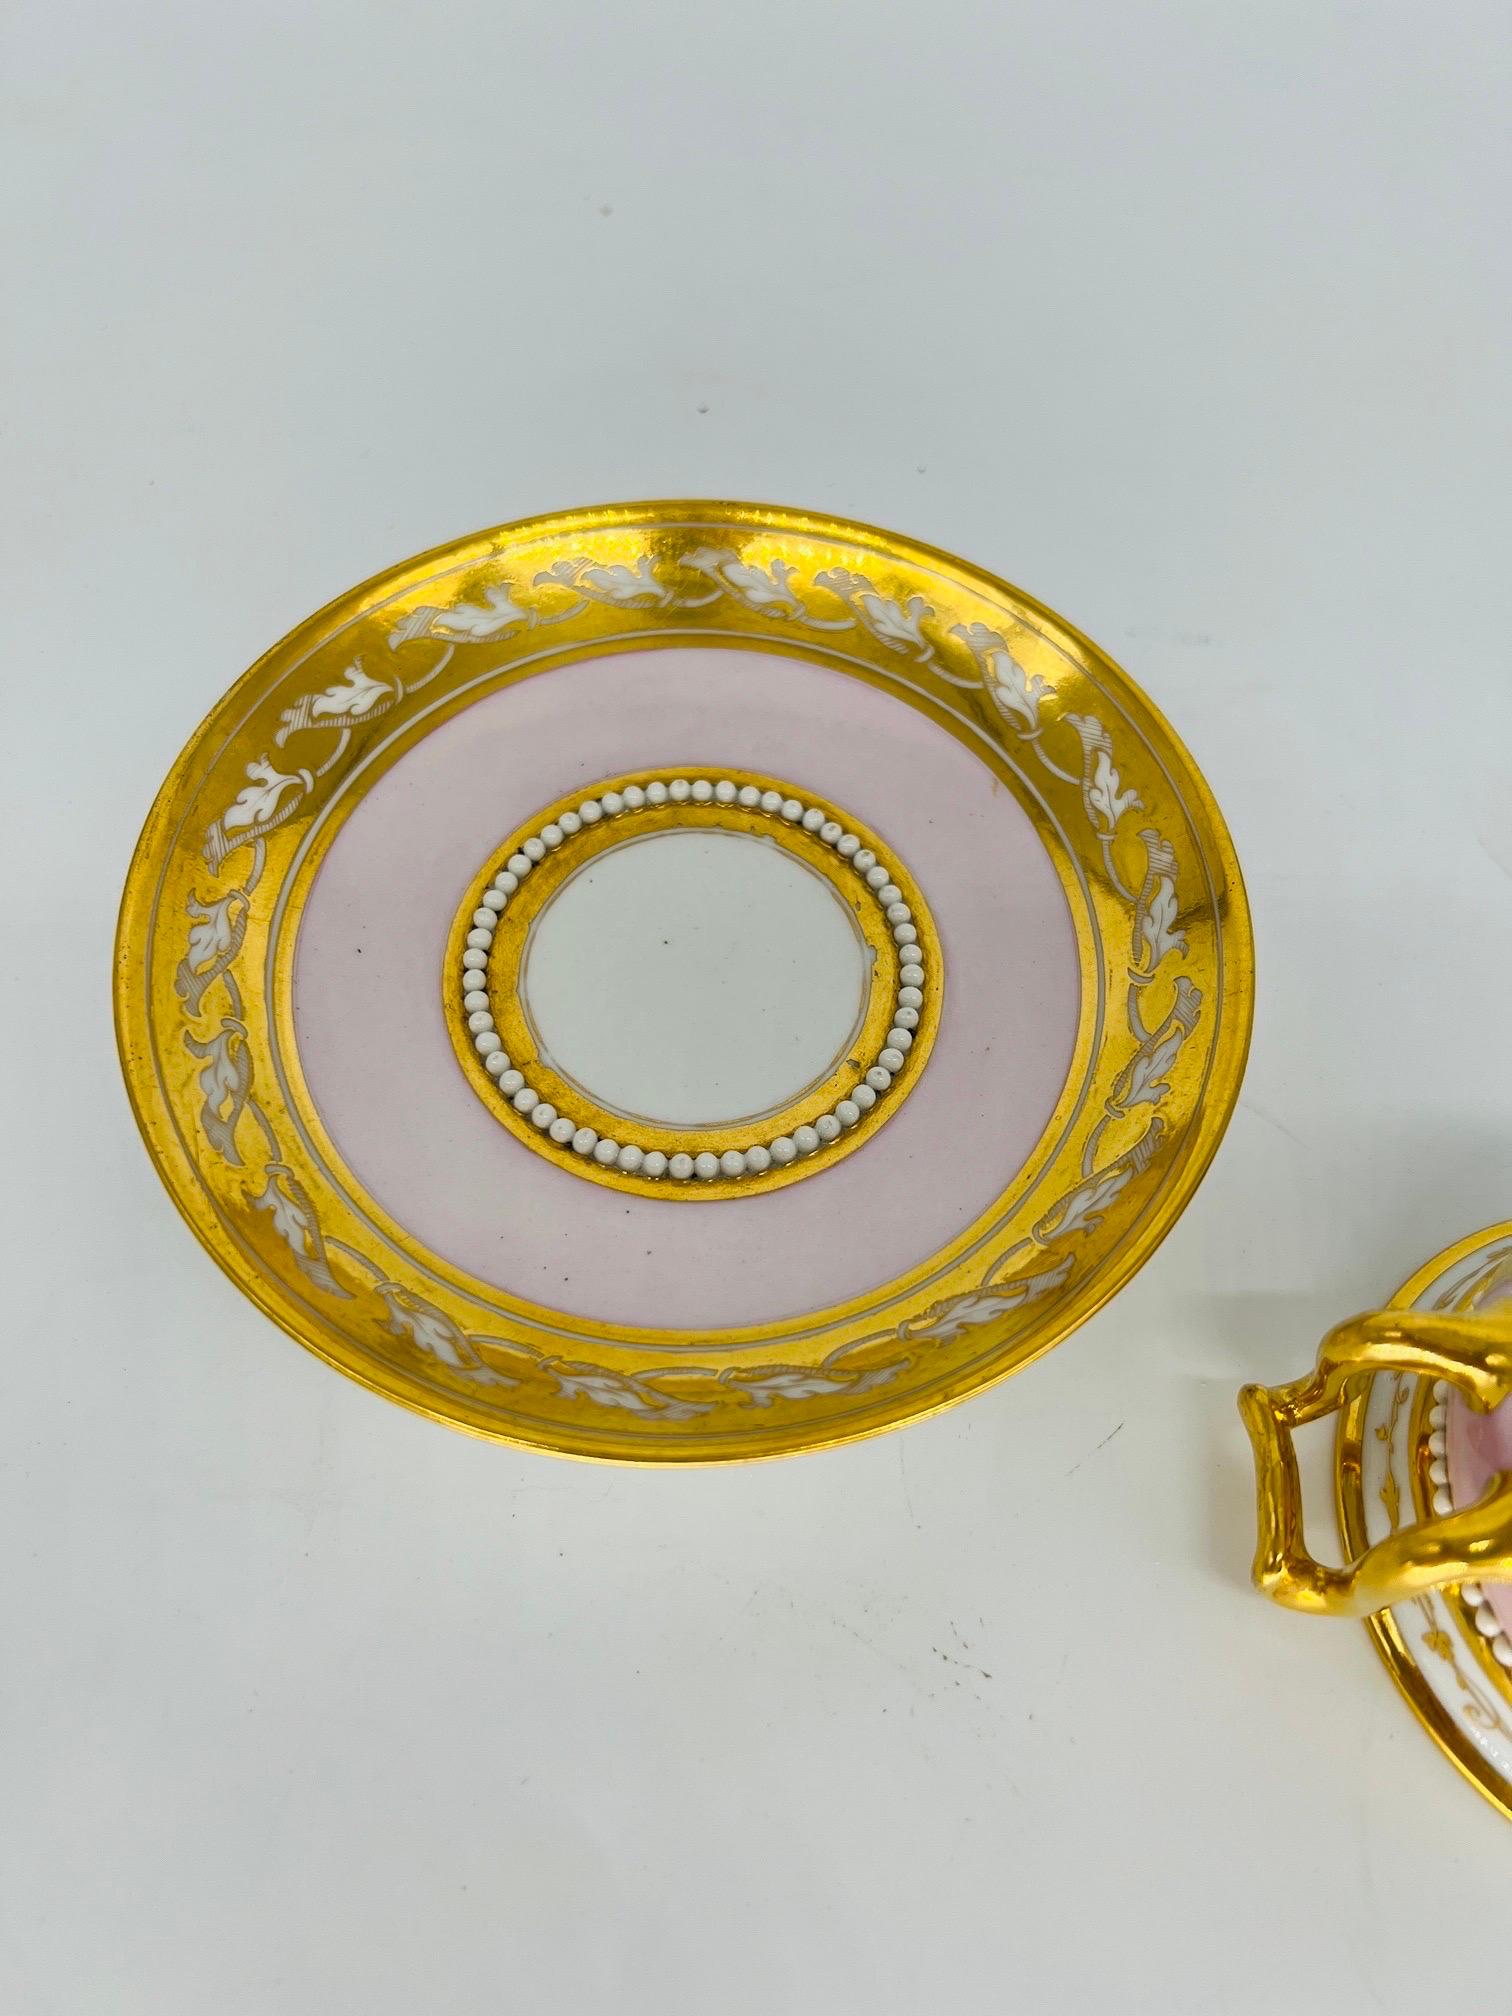 Flight Barr & Barr Porcelain Cabinet Cup & Saucer Attr Thomas Baxter, circa 1815 For Sale 5